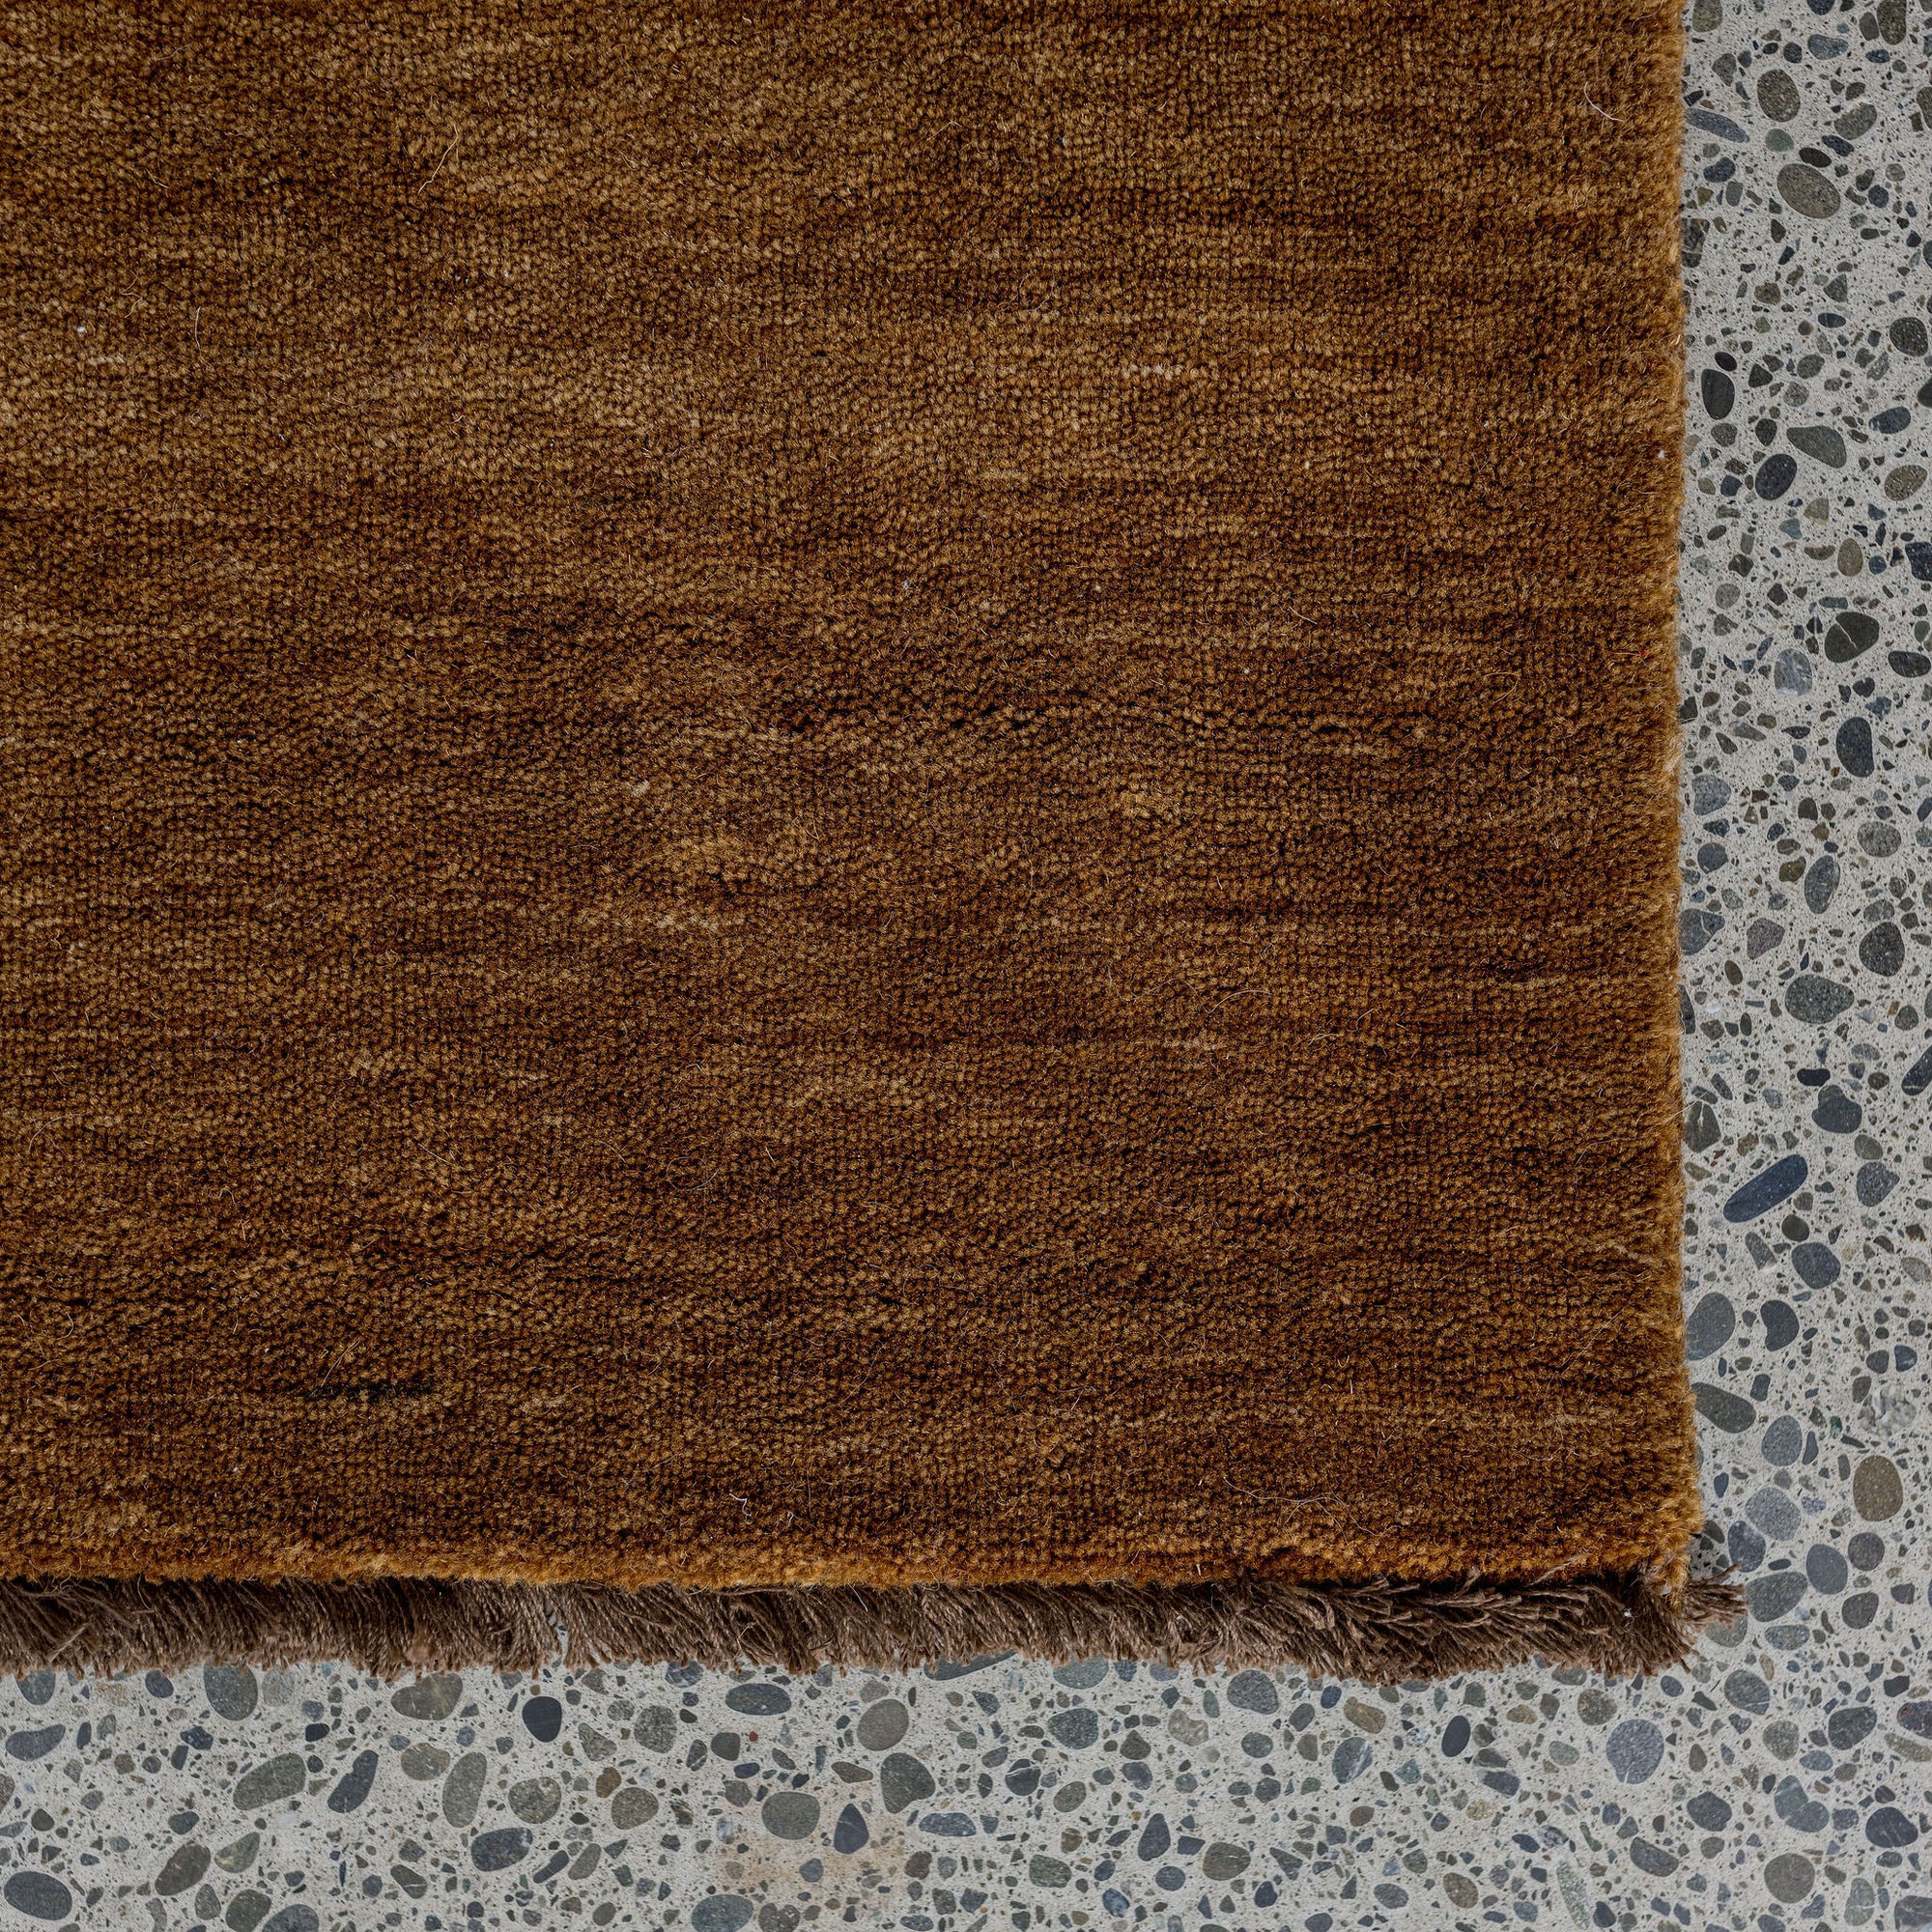 pecan rich brown wool floor area rug